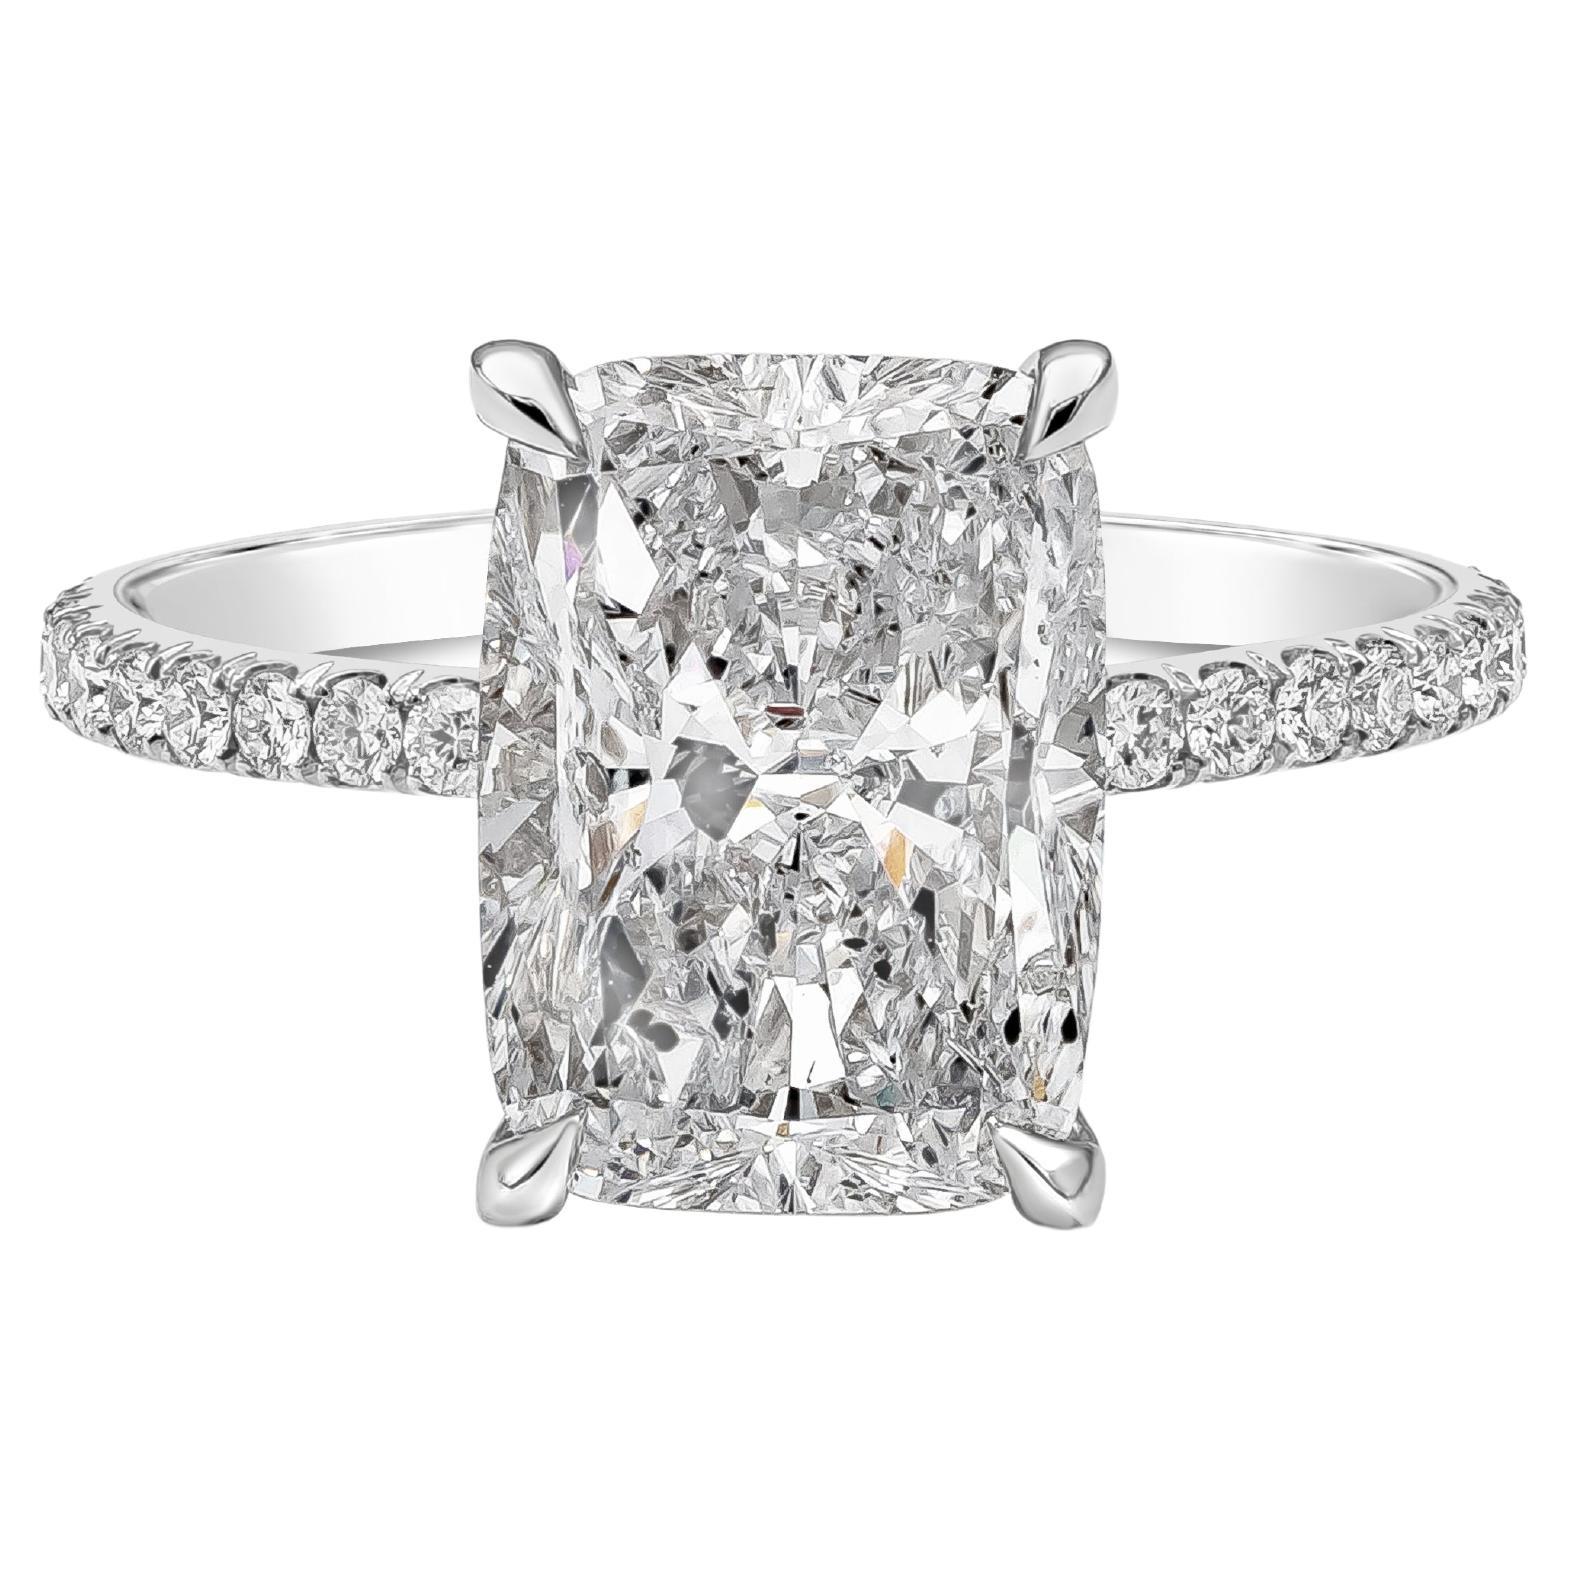 GIA Certified 4.02 Carats Elongated Cushion Cut Diamond Engagement Ring